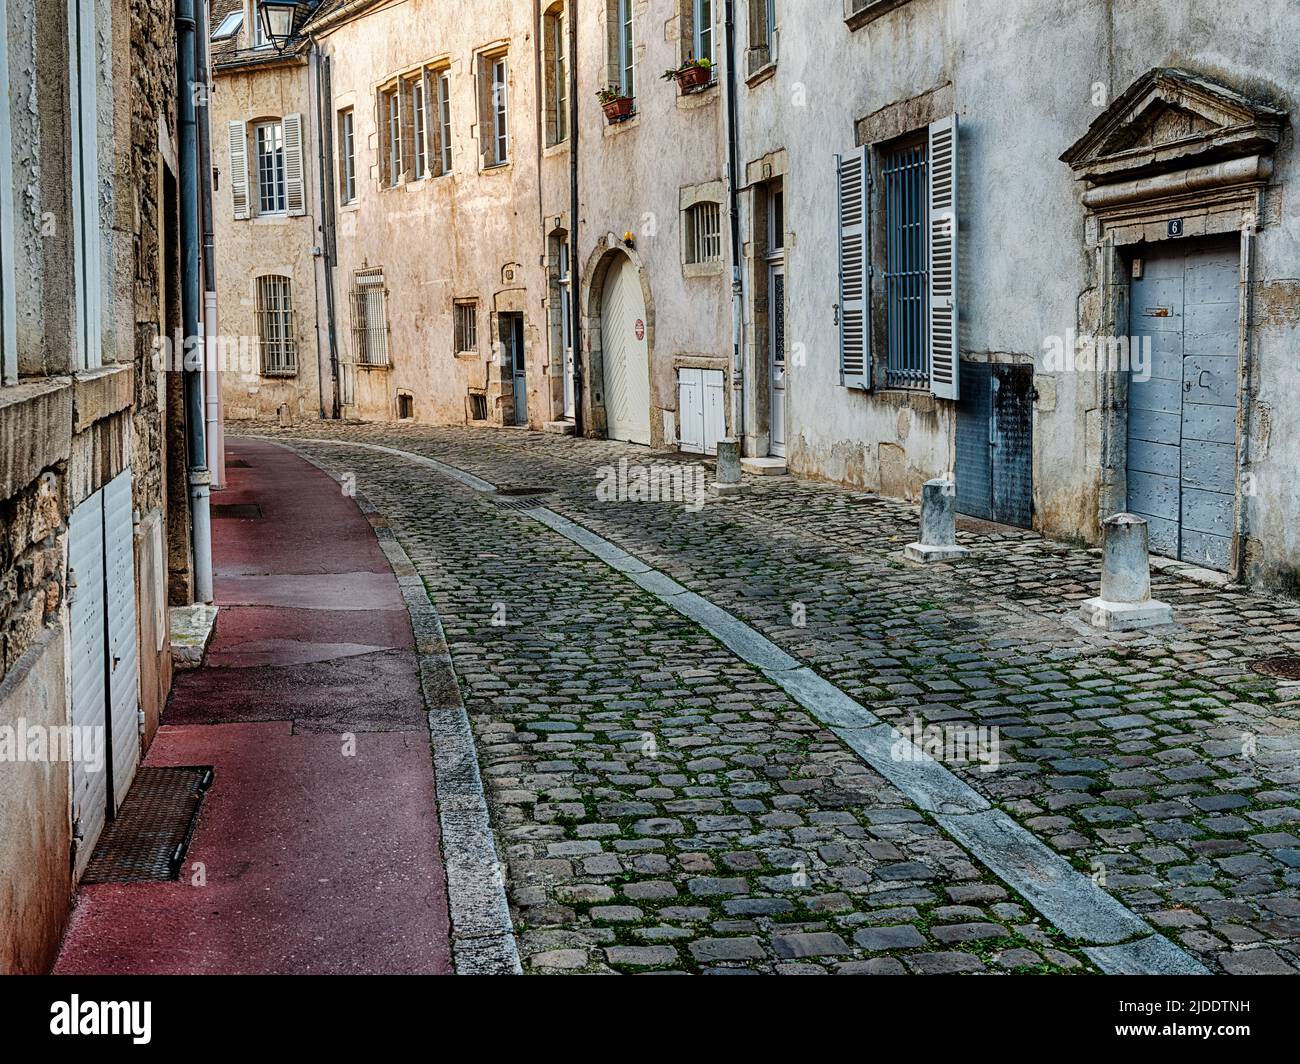 A red sidewalk runs alongside an old cobblestone street in Beaune, France. Stock Photo